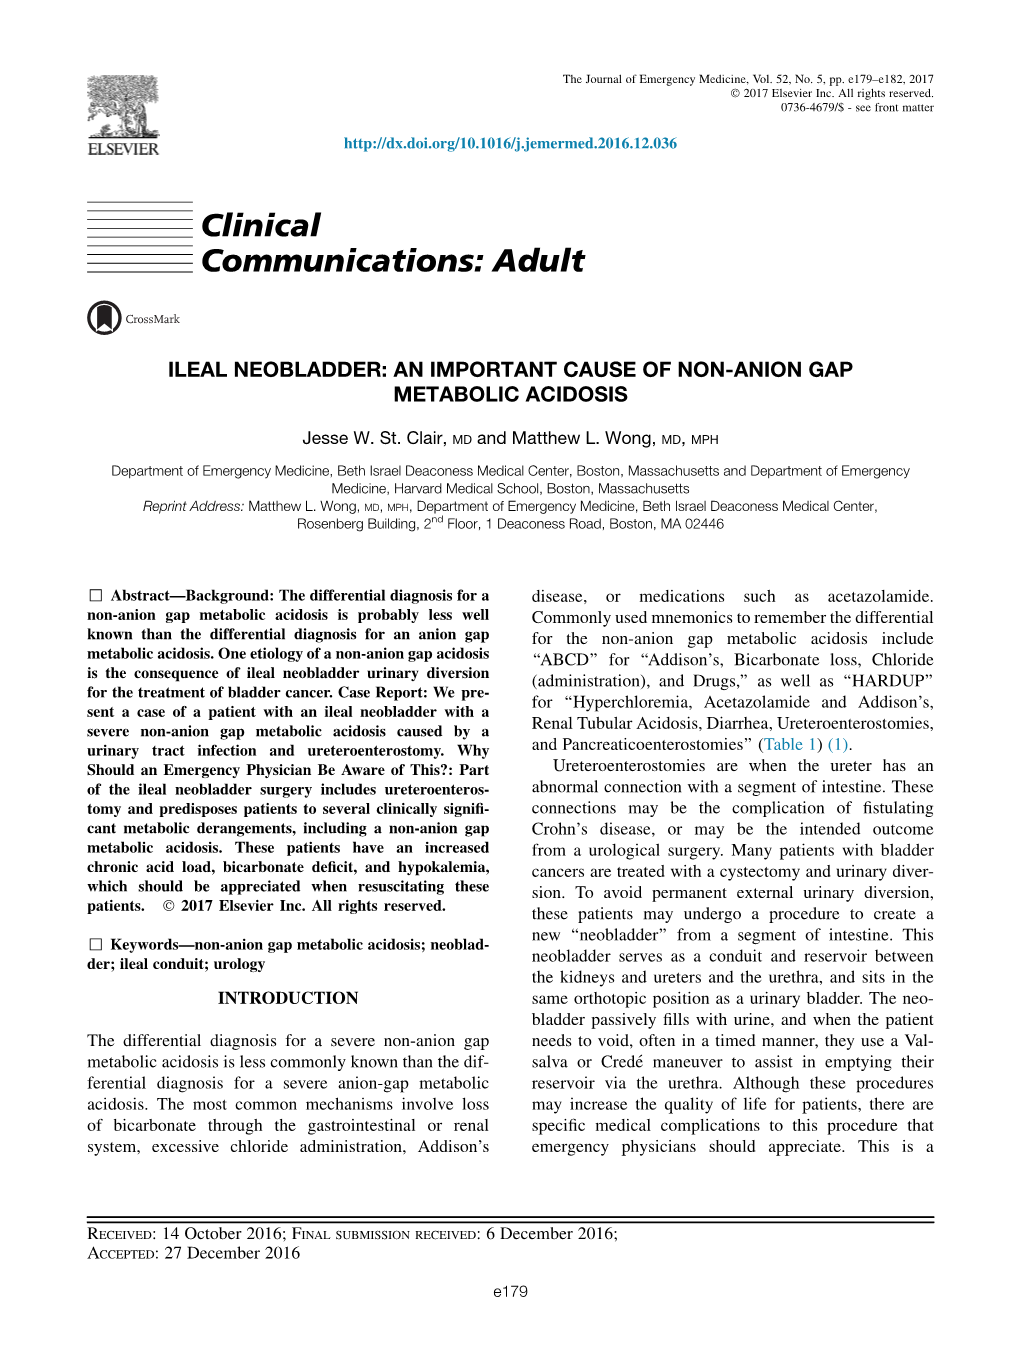 Ileal Neobladder: an Important Cause of Non-Anion Gap Metabolic Acidosis